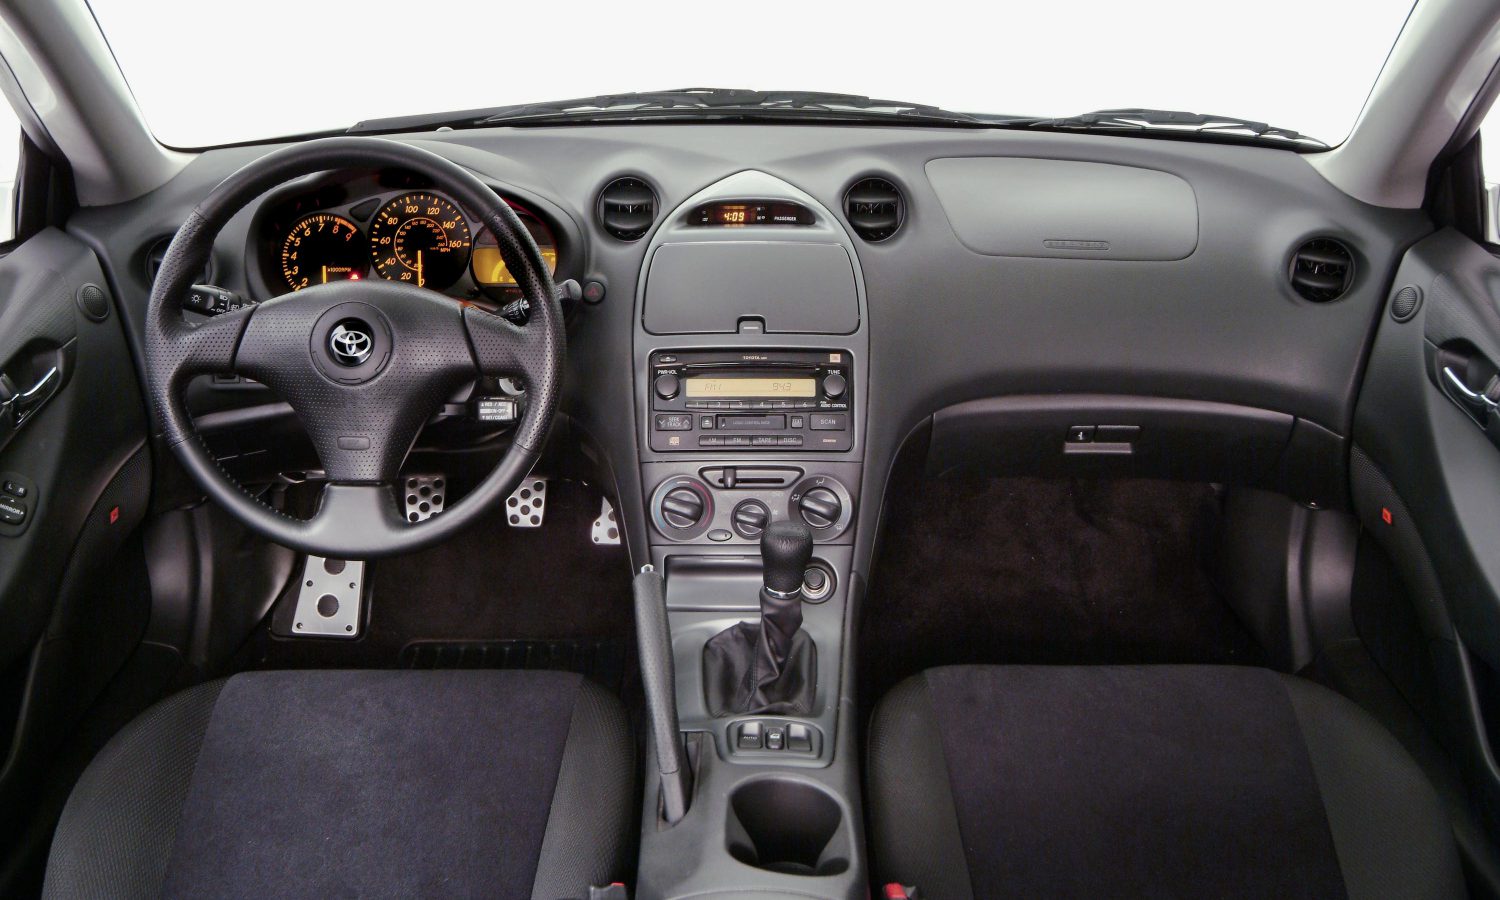 2003 - 2005 Toyota Celica GT-S interior 012 - Toyota USA Newsroom